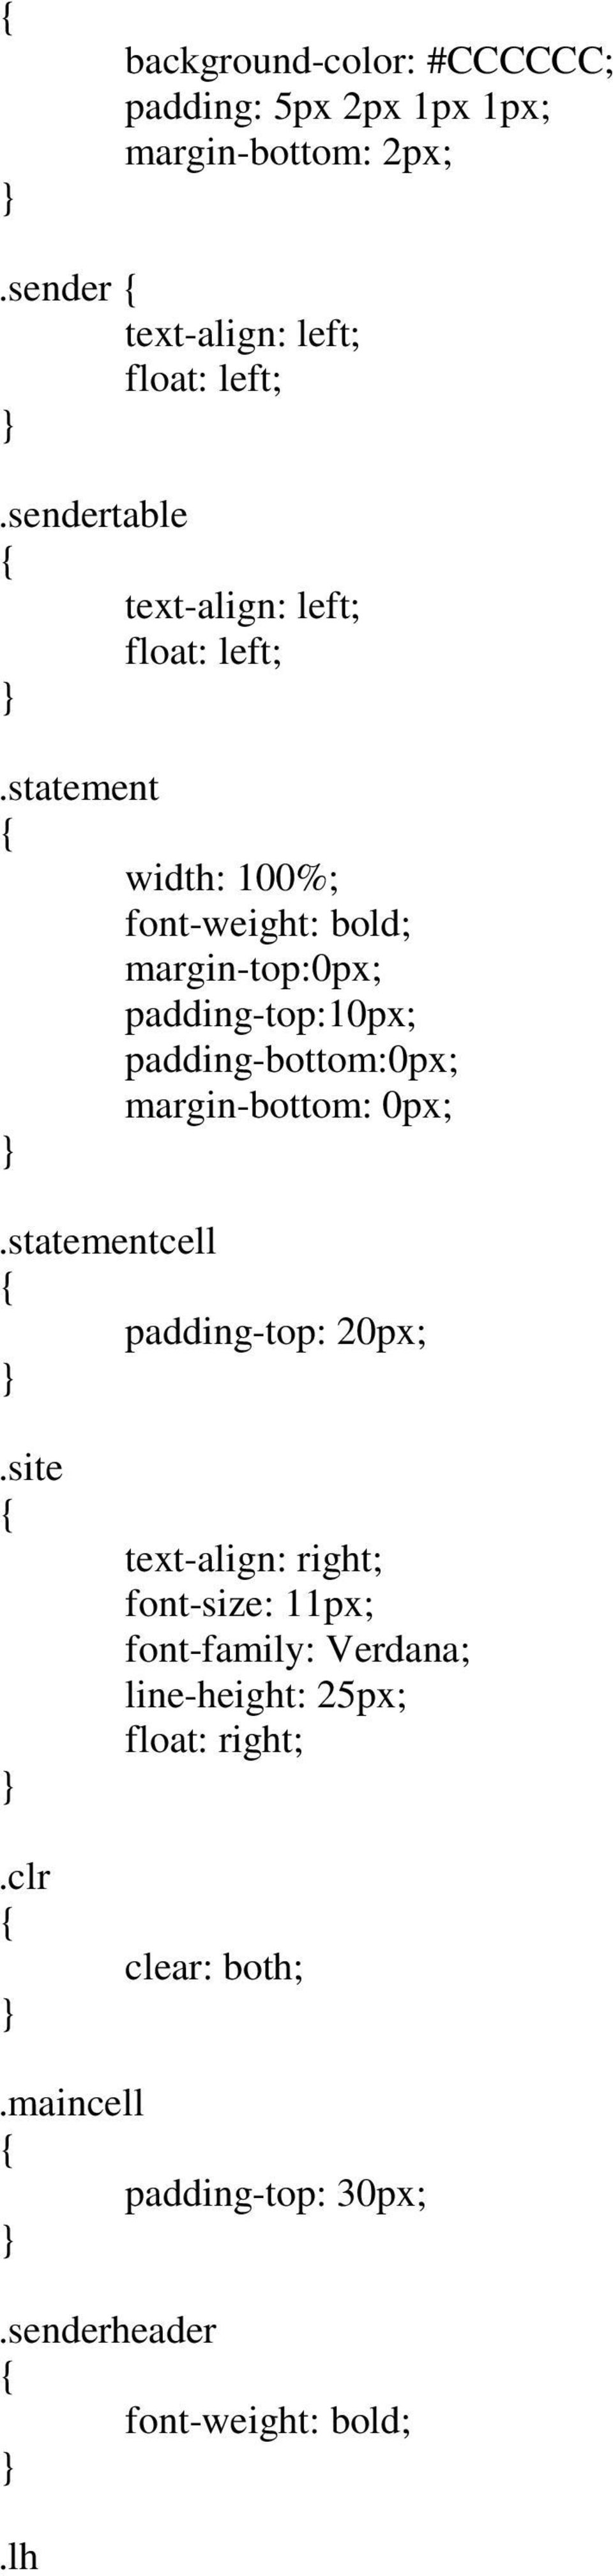 statement width: 100%; font-weight: bold; margin-top:0px; padding-top:10px; padding-bottom:0px; margin-bottom: 0px;.